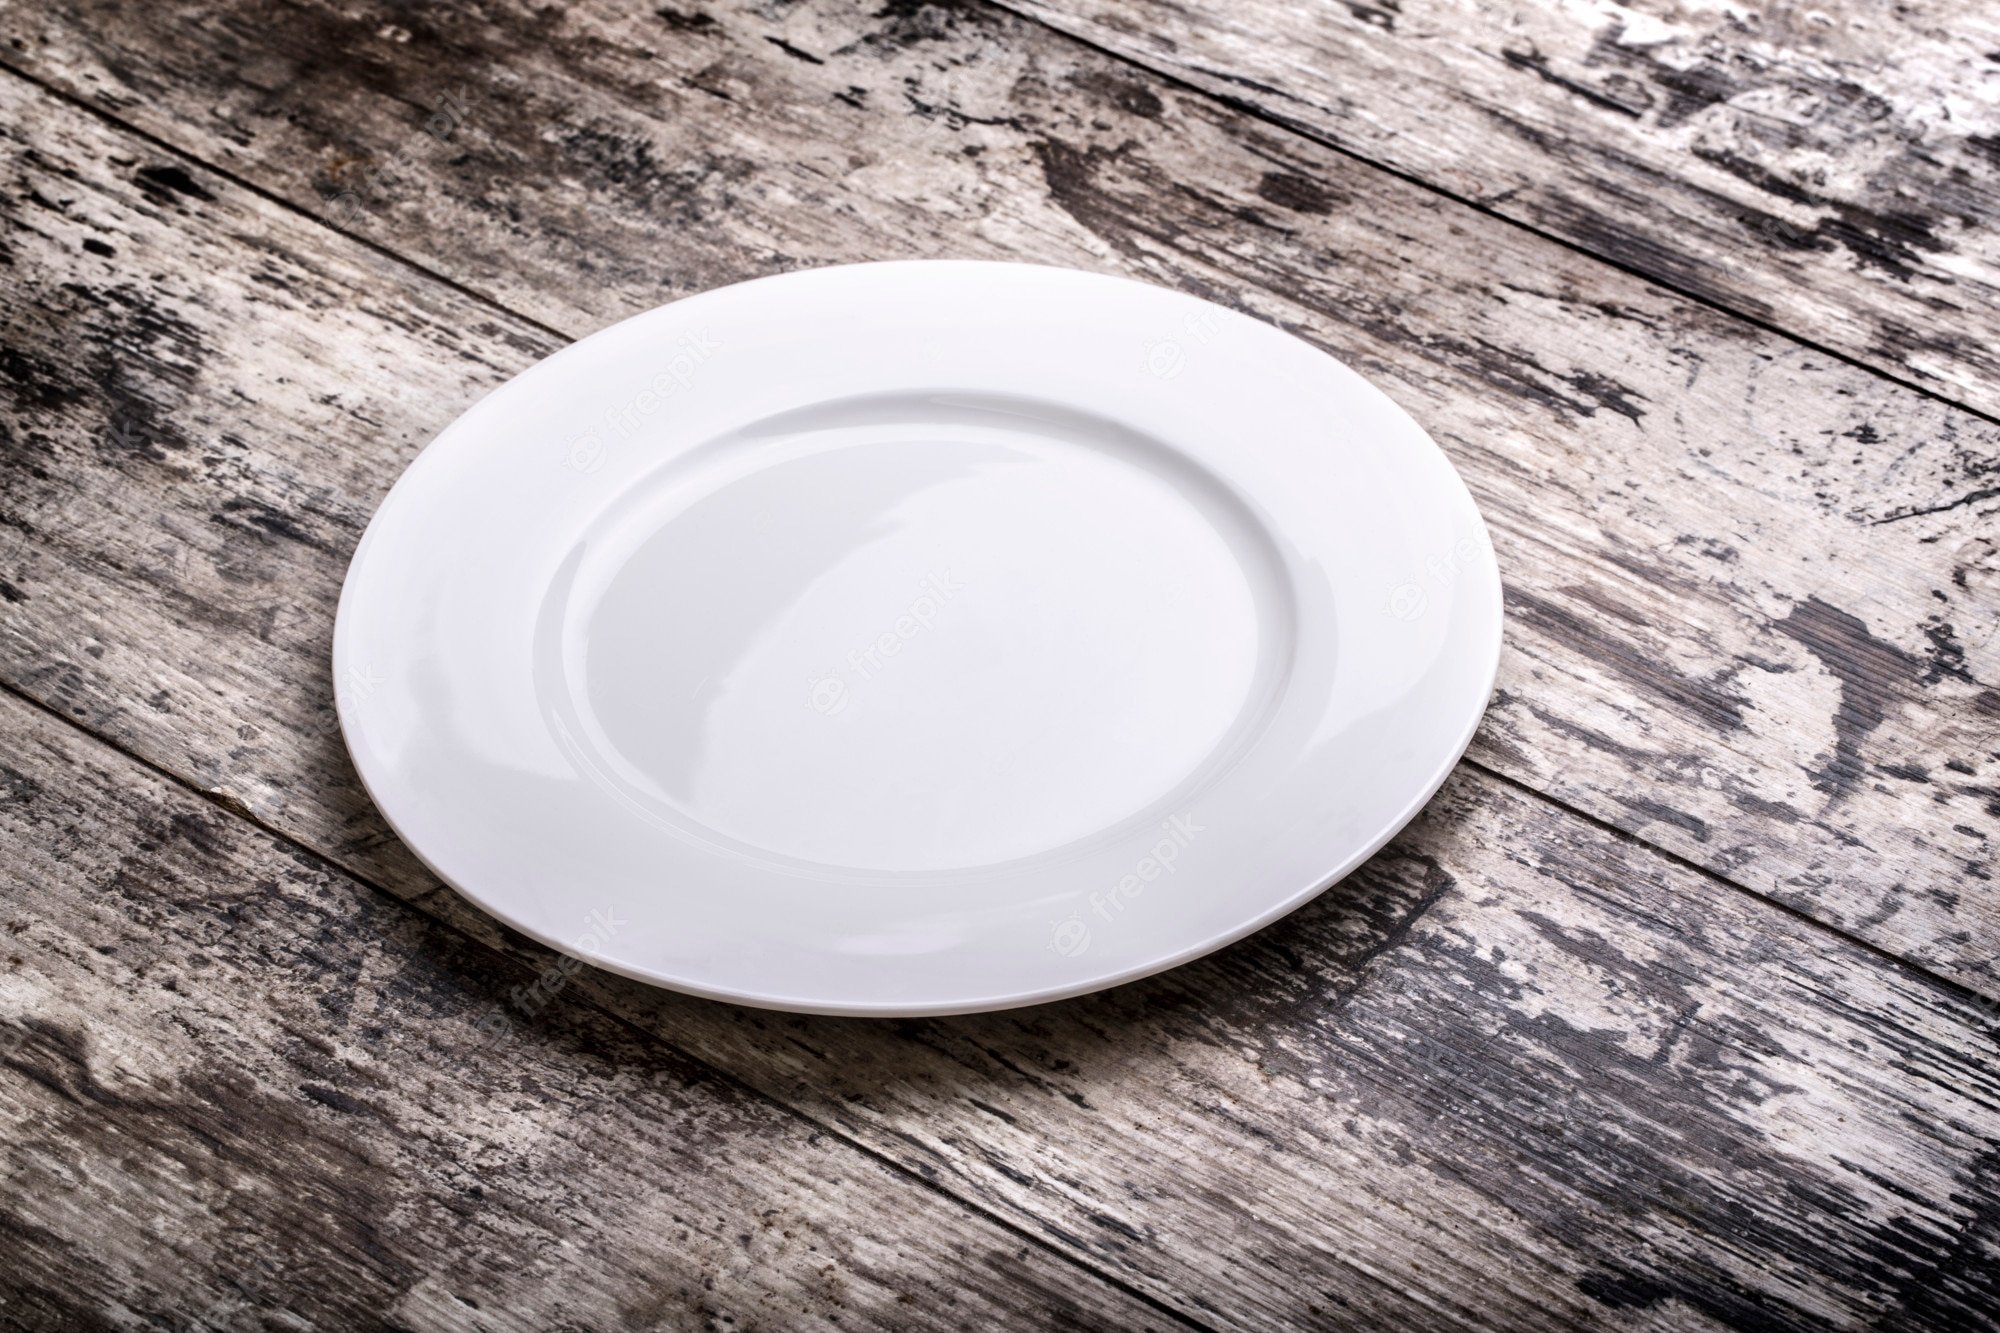 Лишняя тарелка на столе. Тарелка на столе. Белая тарелка на столе. Чистые тарелки. Стол с тарелкой для фотошопа.